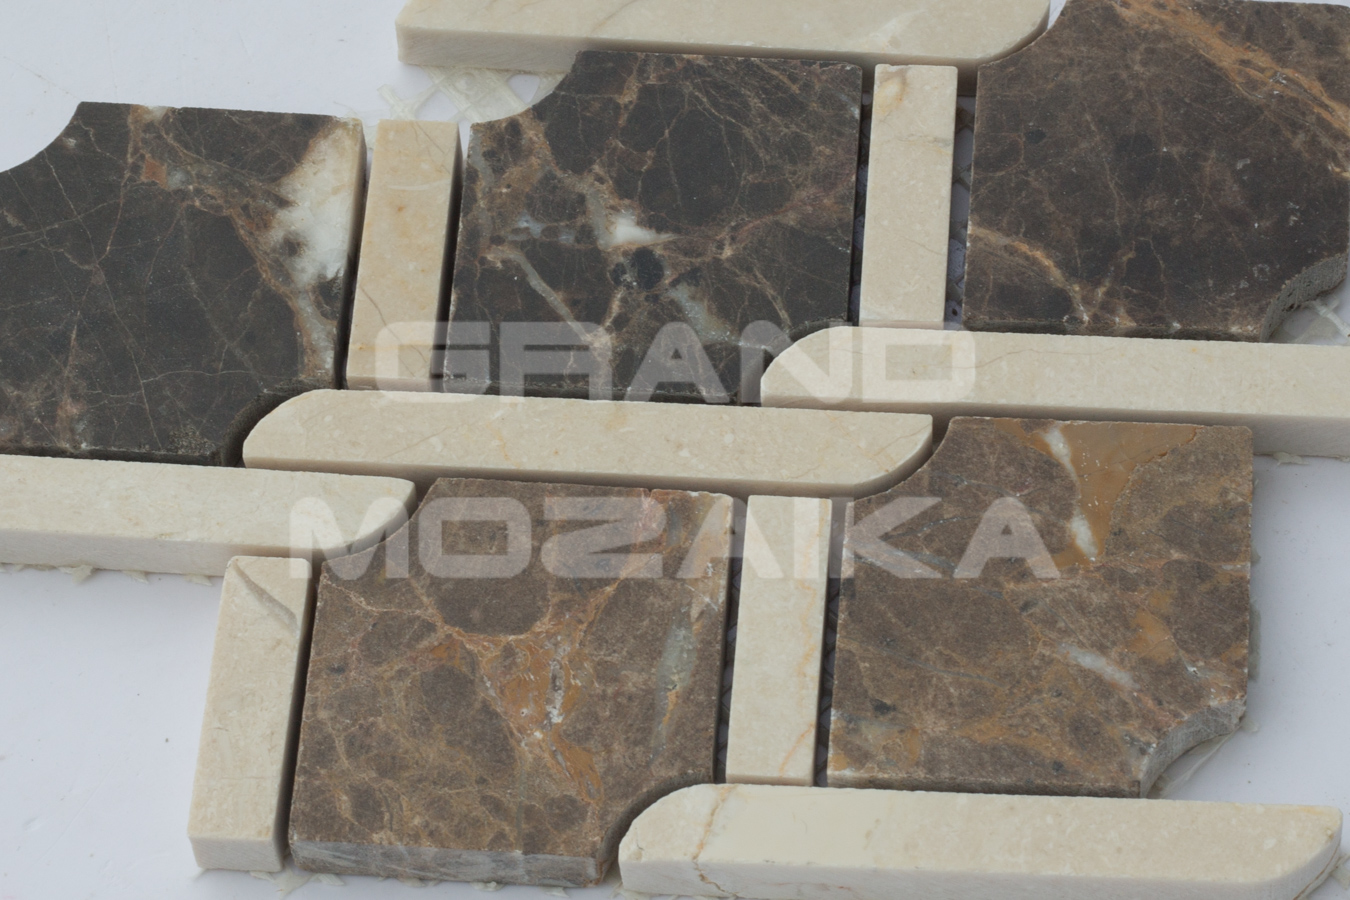 Мозаика CV20141 серия Natural Stone